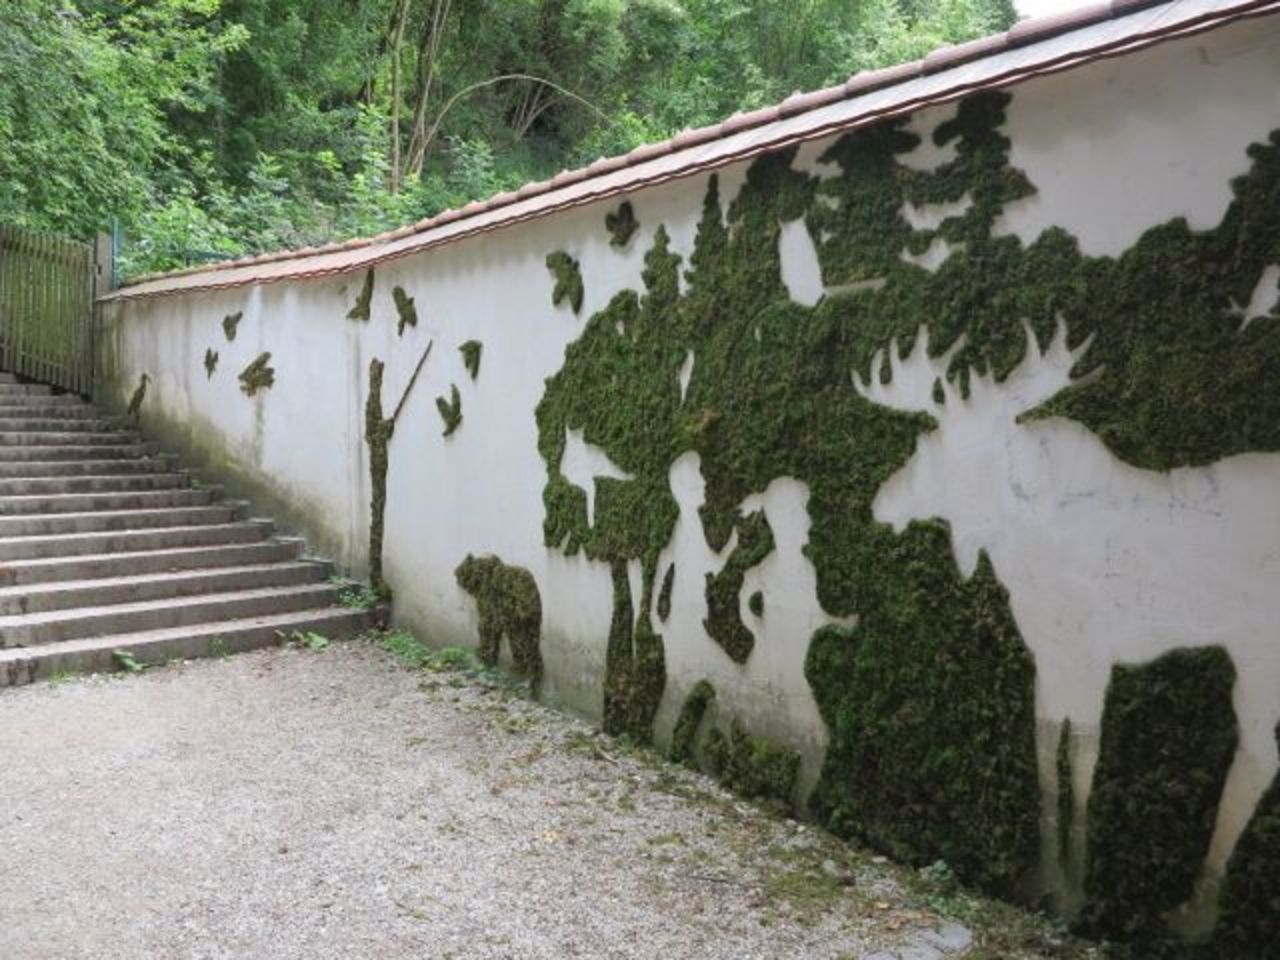 Love this #moss #graffiti by Carly Schmitt #MossyMondays #Art #Nature https://t.co/VZbJLKMgPy